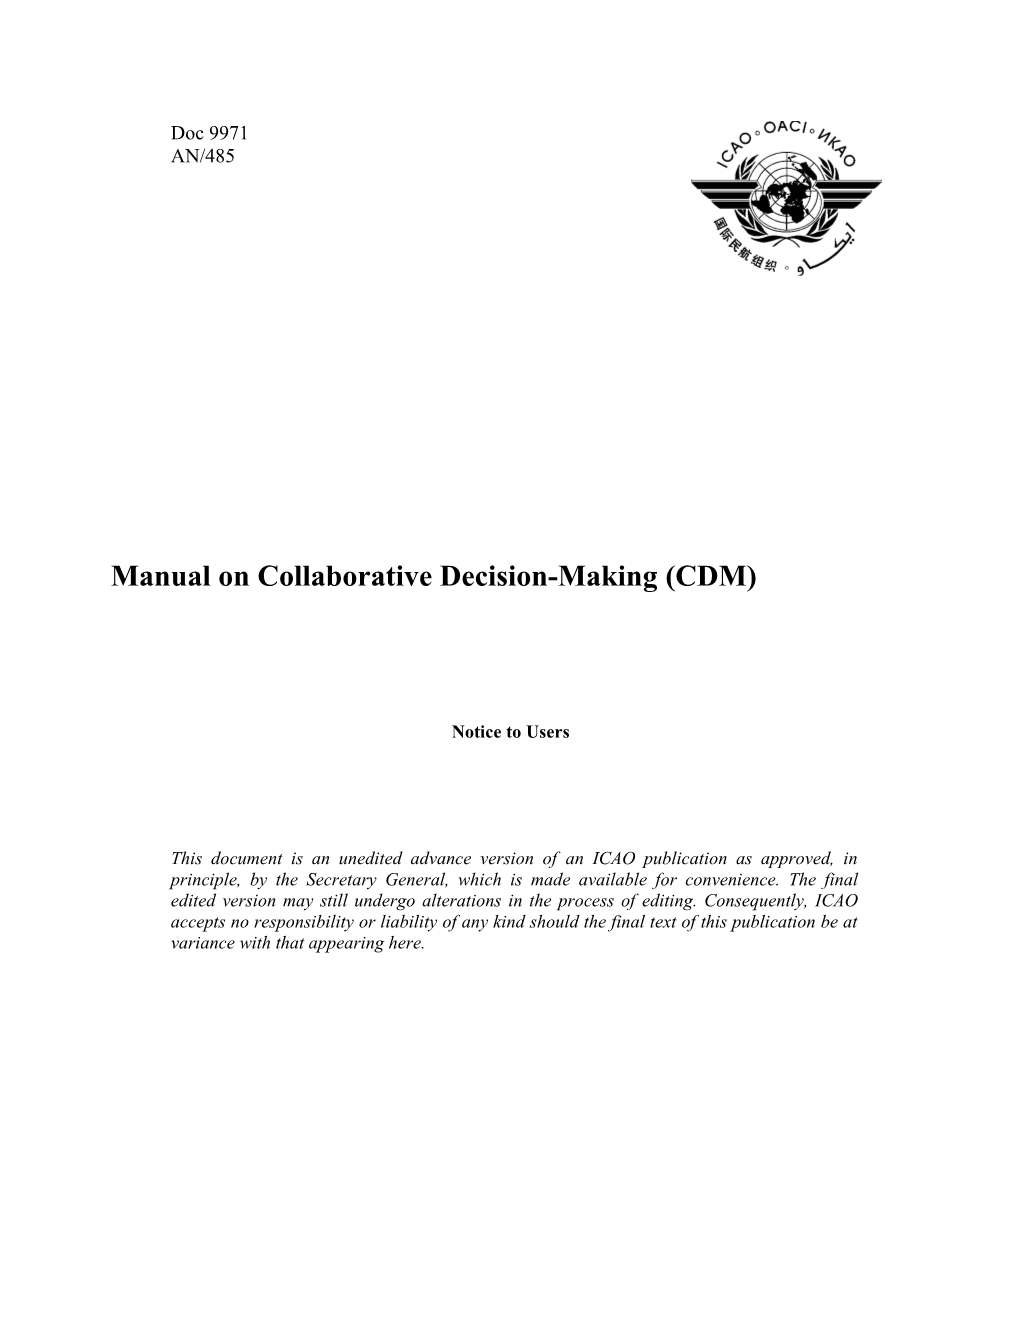 ICAO Doc 9971 CDM Manual